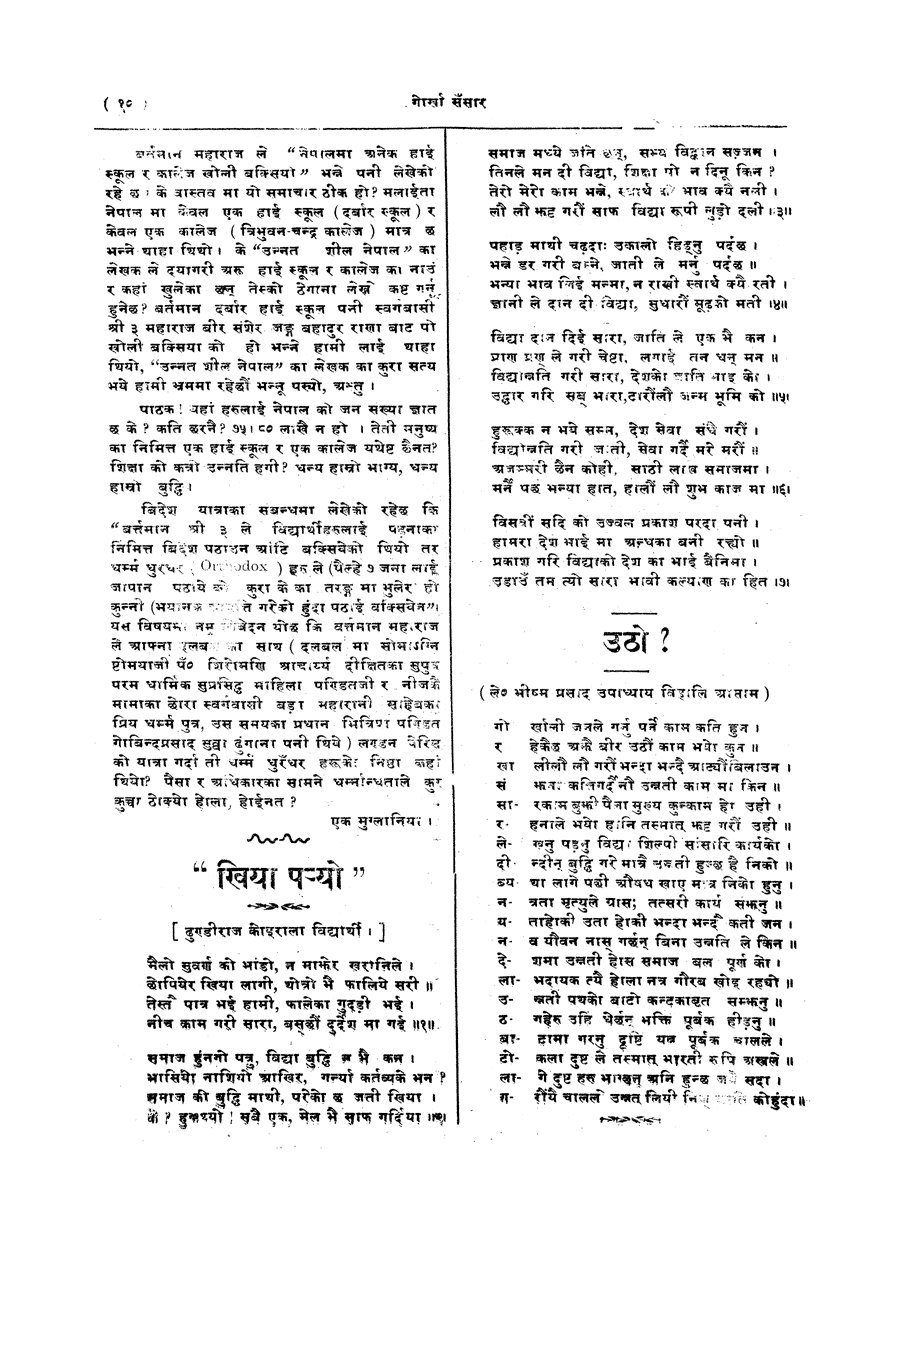 Gorkha Sansar, 6 Mar 1928, page 10